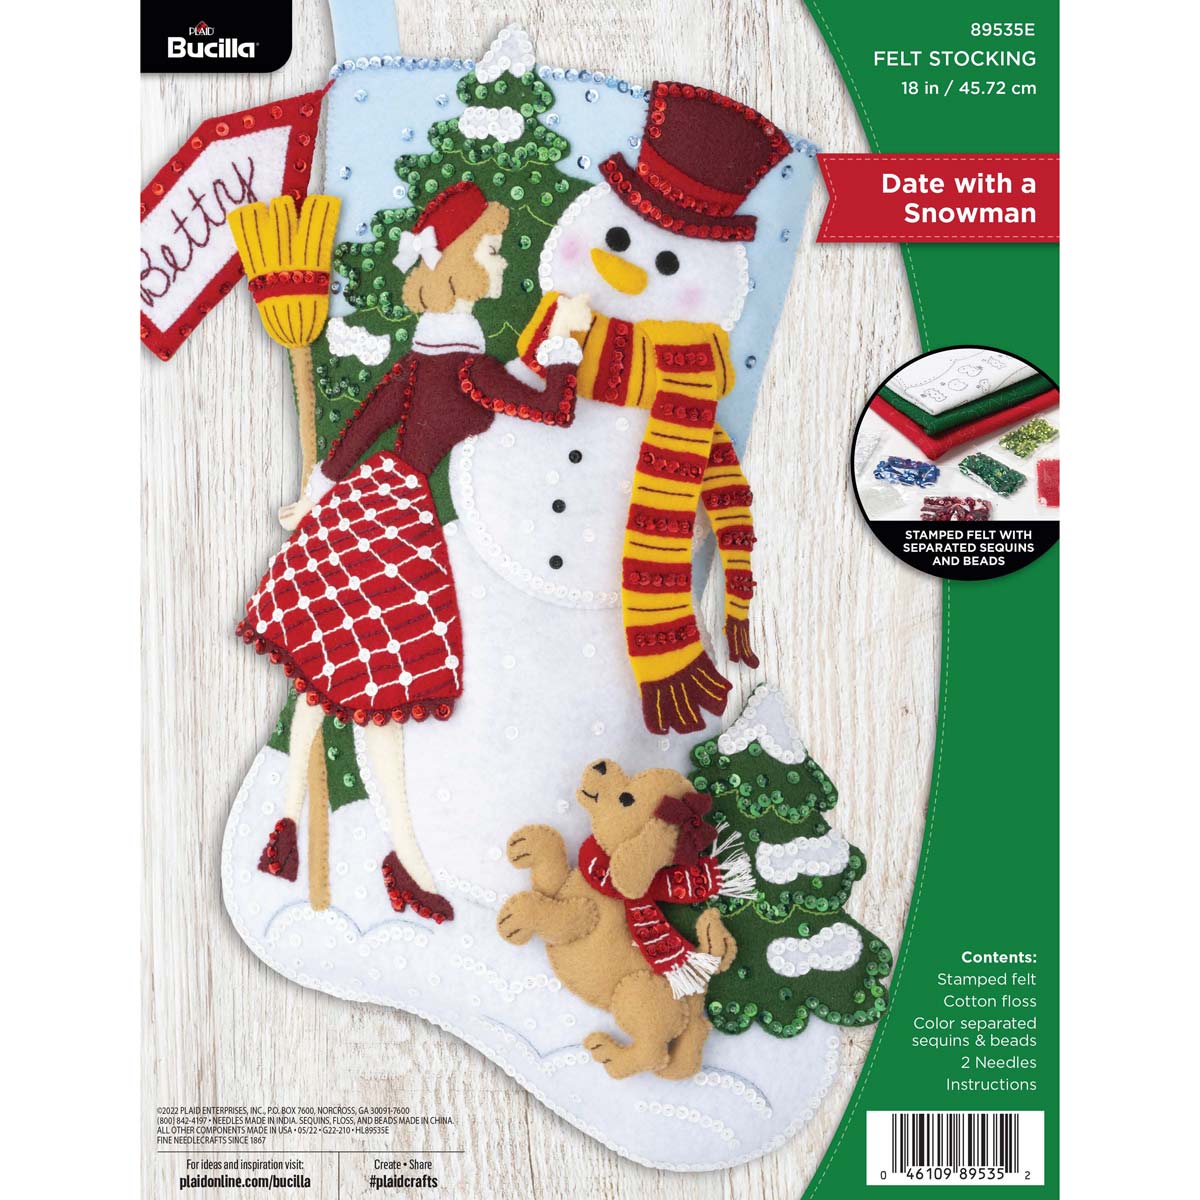 Shop Plaid Bucilla ® Seasonal - Felt - Stocking Kits - Holiday Patchwork  89604E - 89604E